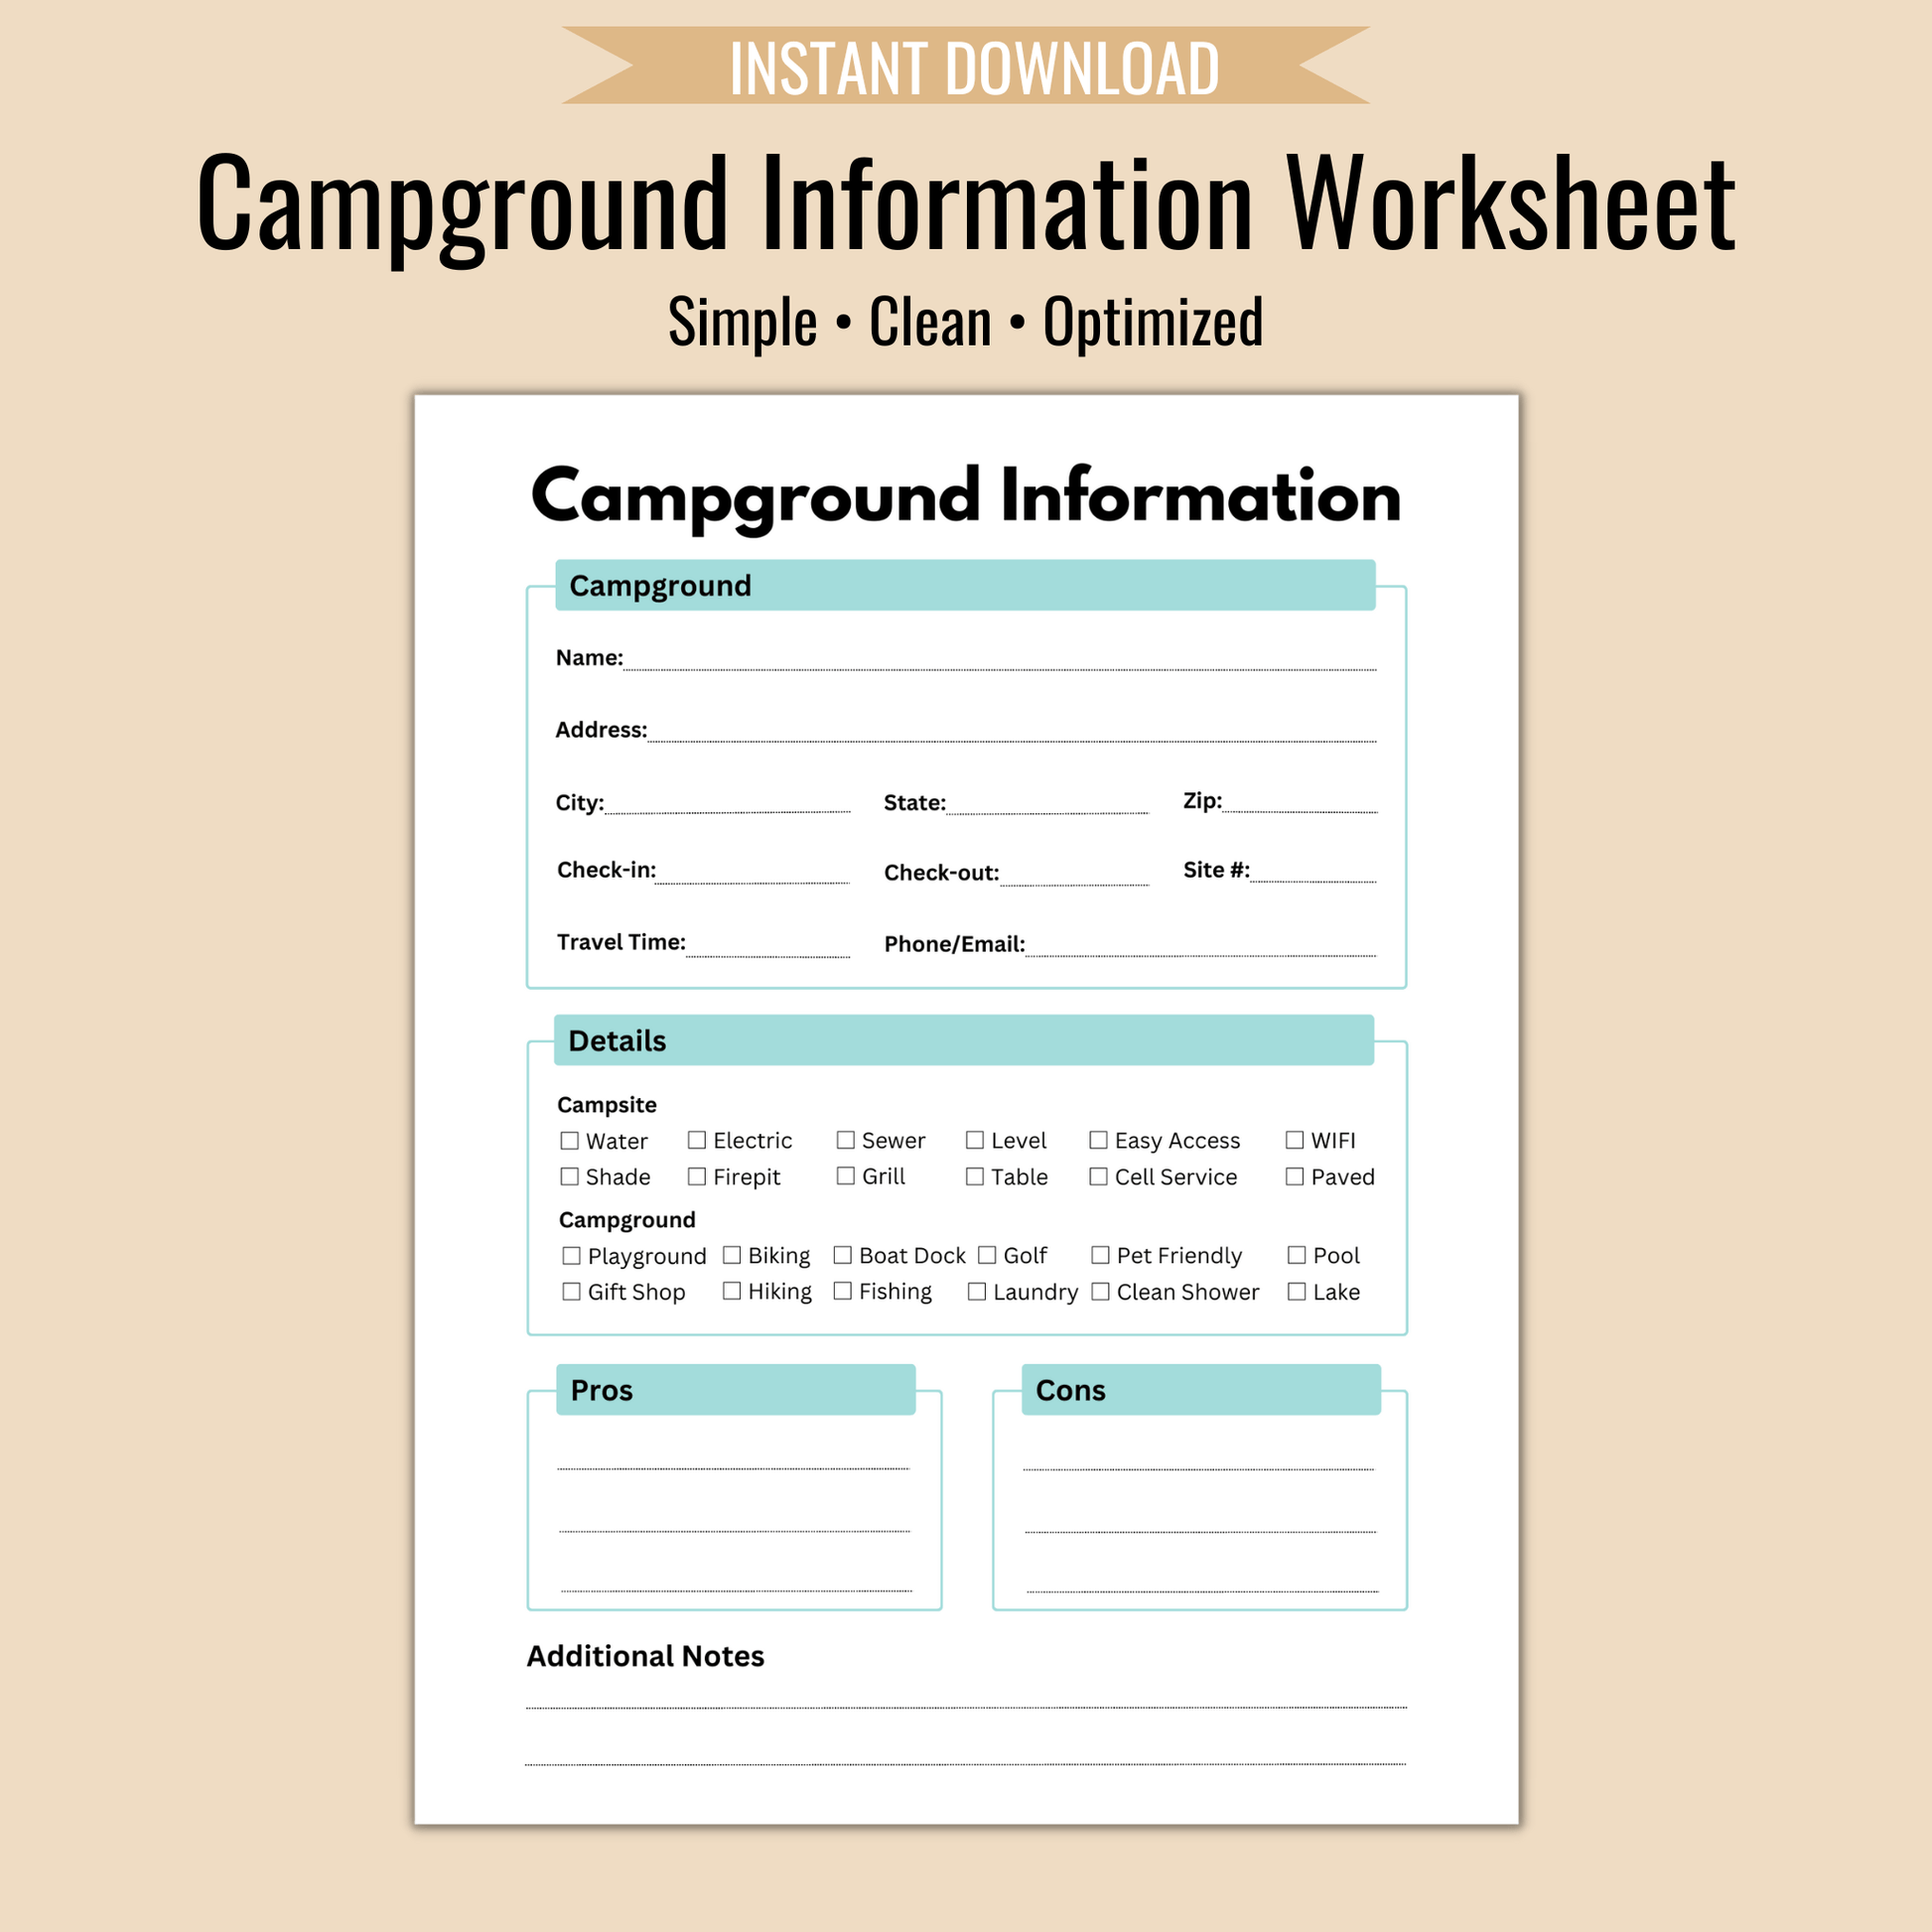 Campground Information Worksheet - Camper FAQs